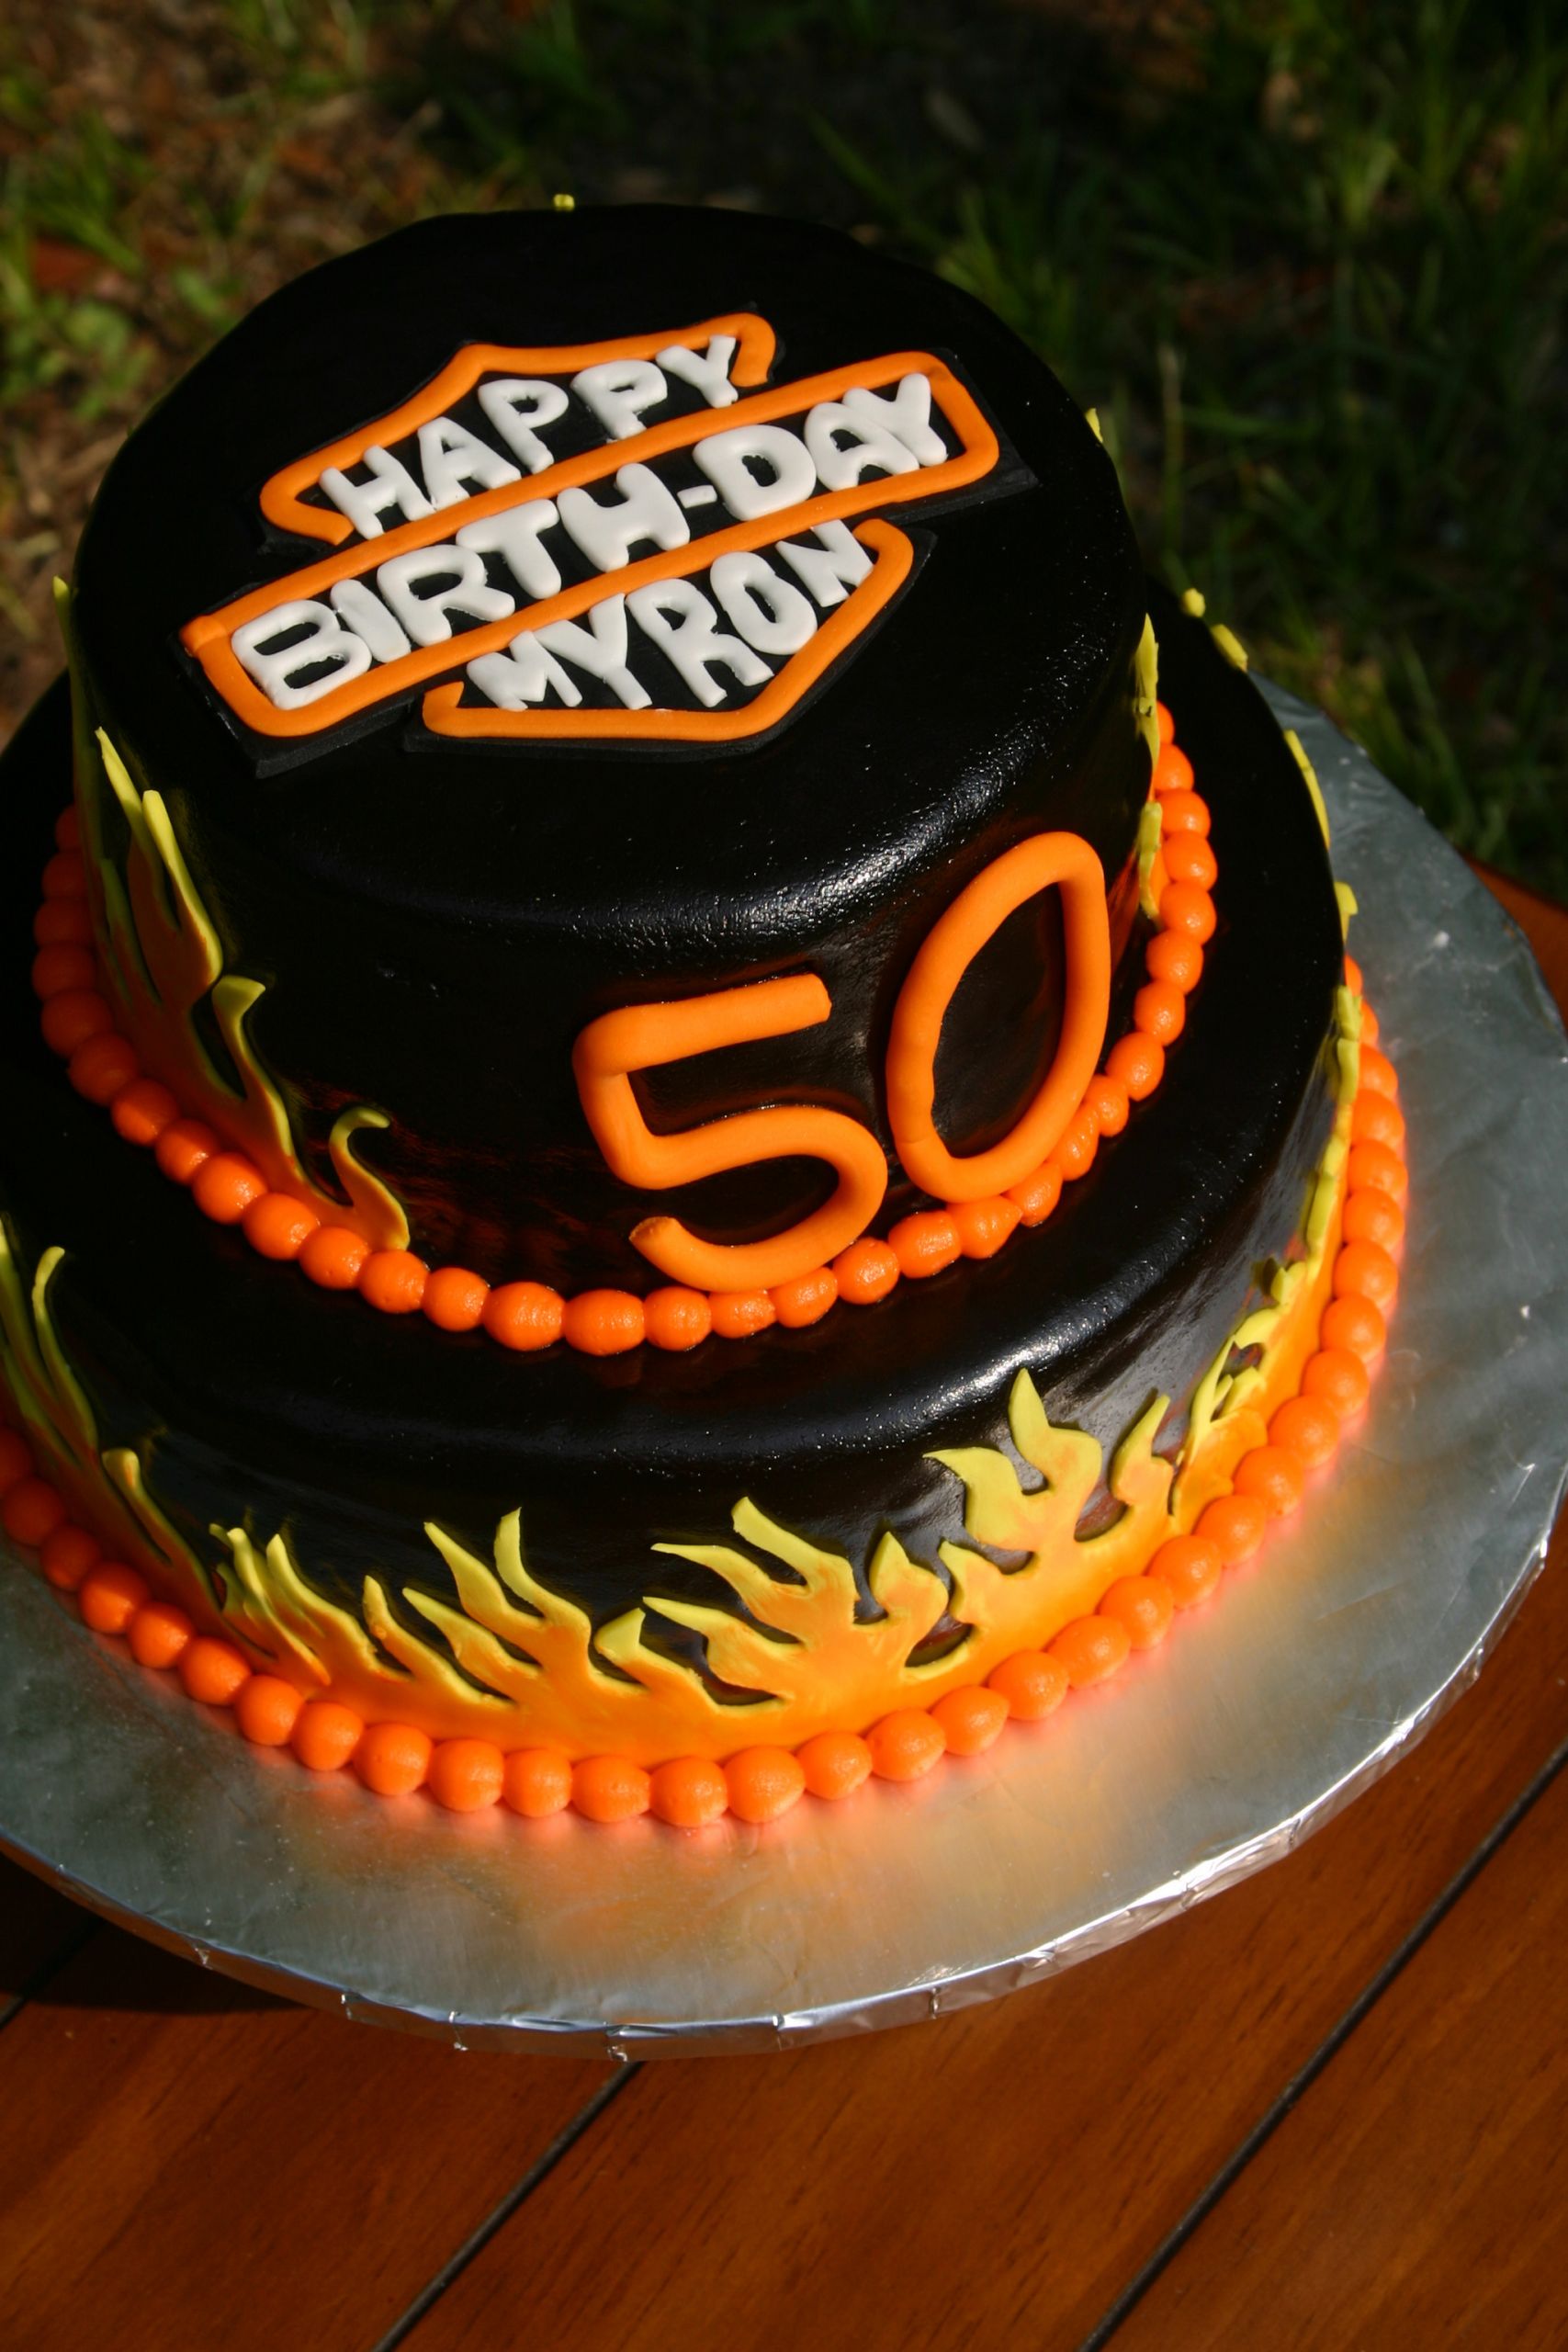 Harley Davidson Birthday Cakes
 Harley Davidson cake